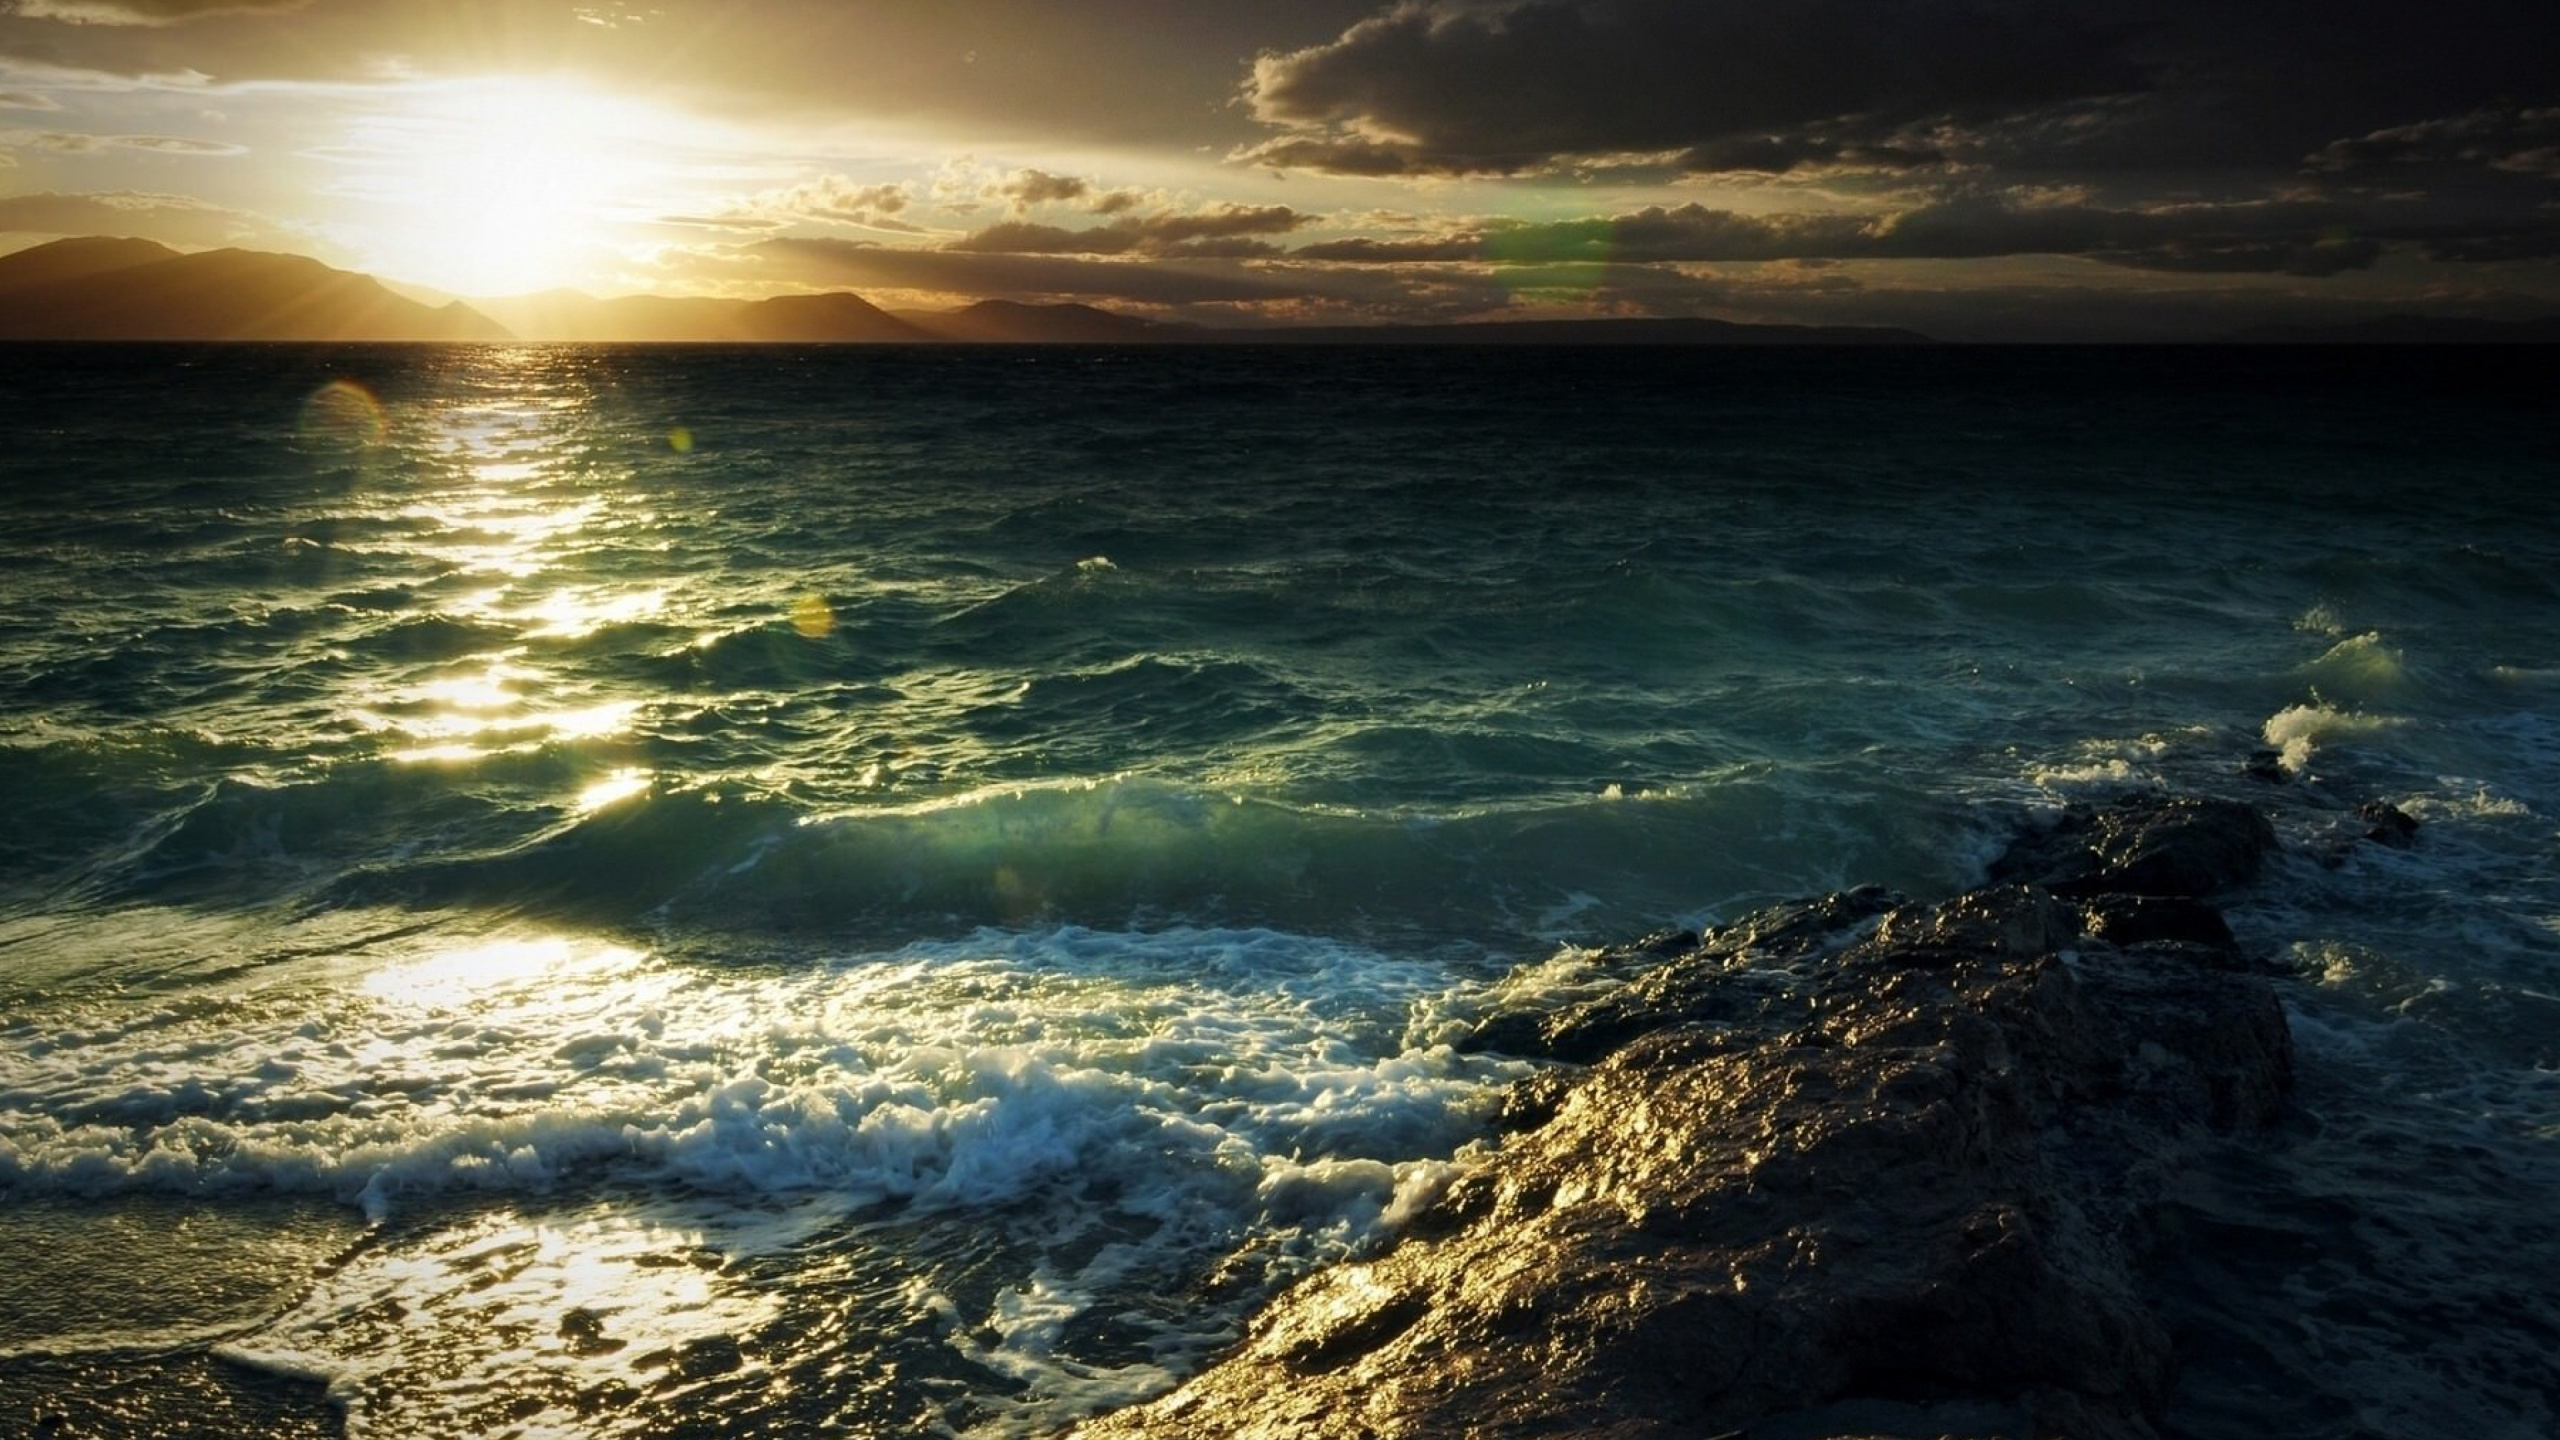 Ocean Waves Crashing on Shore During Sunset. Wallpaper in 2560x1440 Resolution